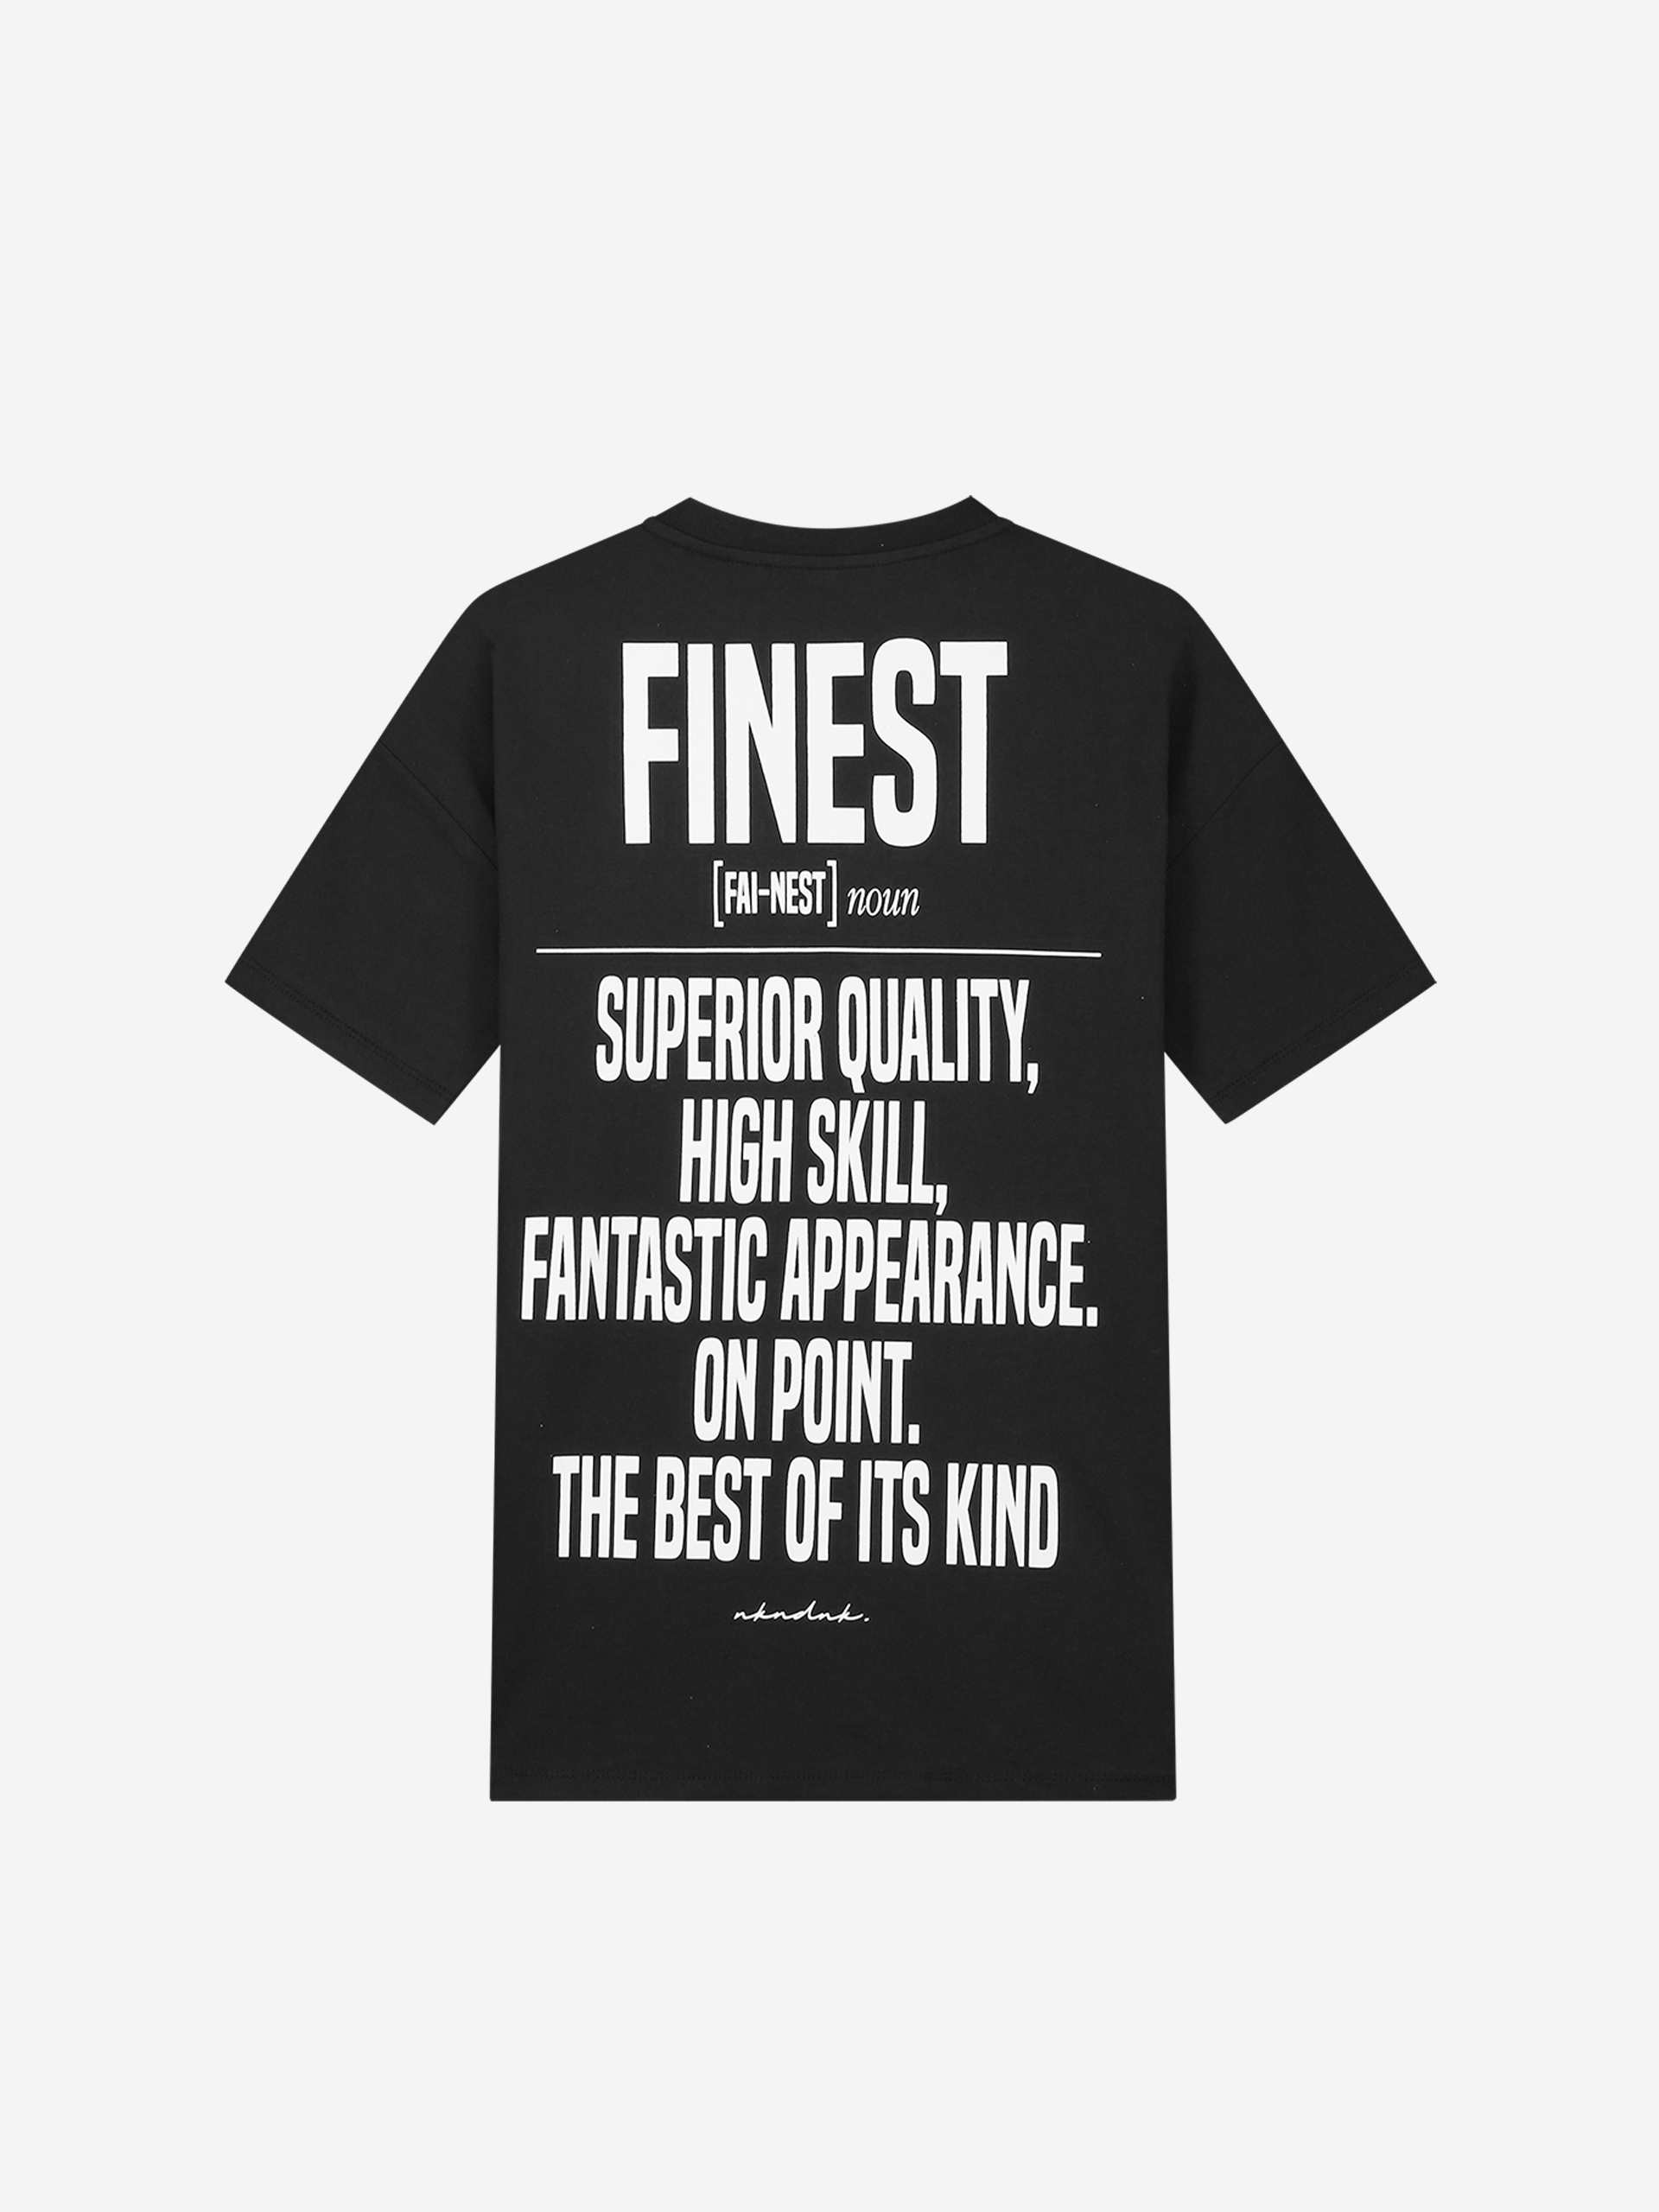 Superior T-Shirt